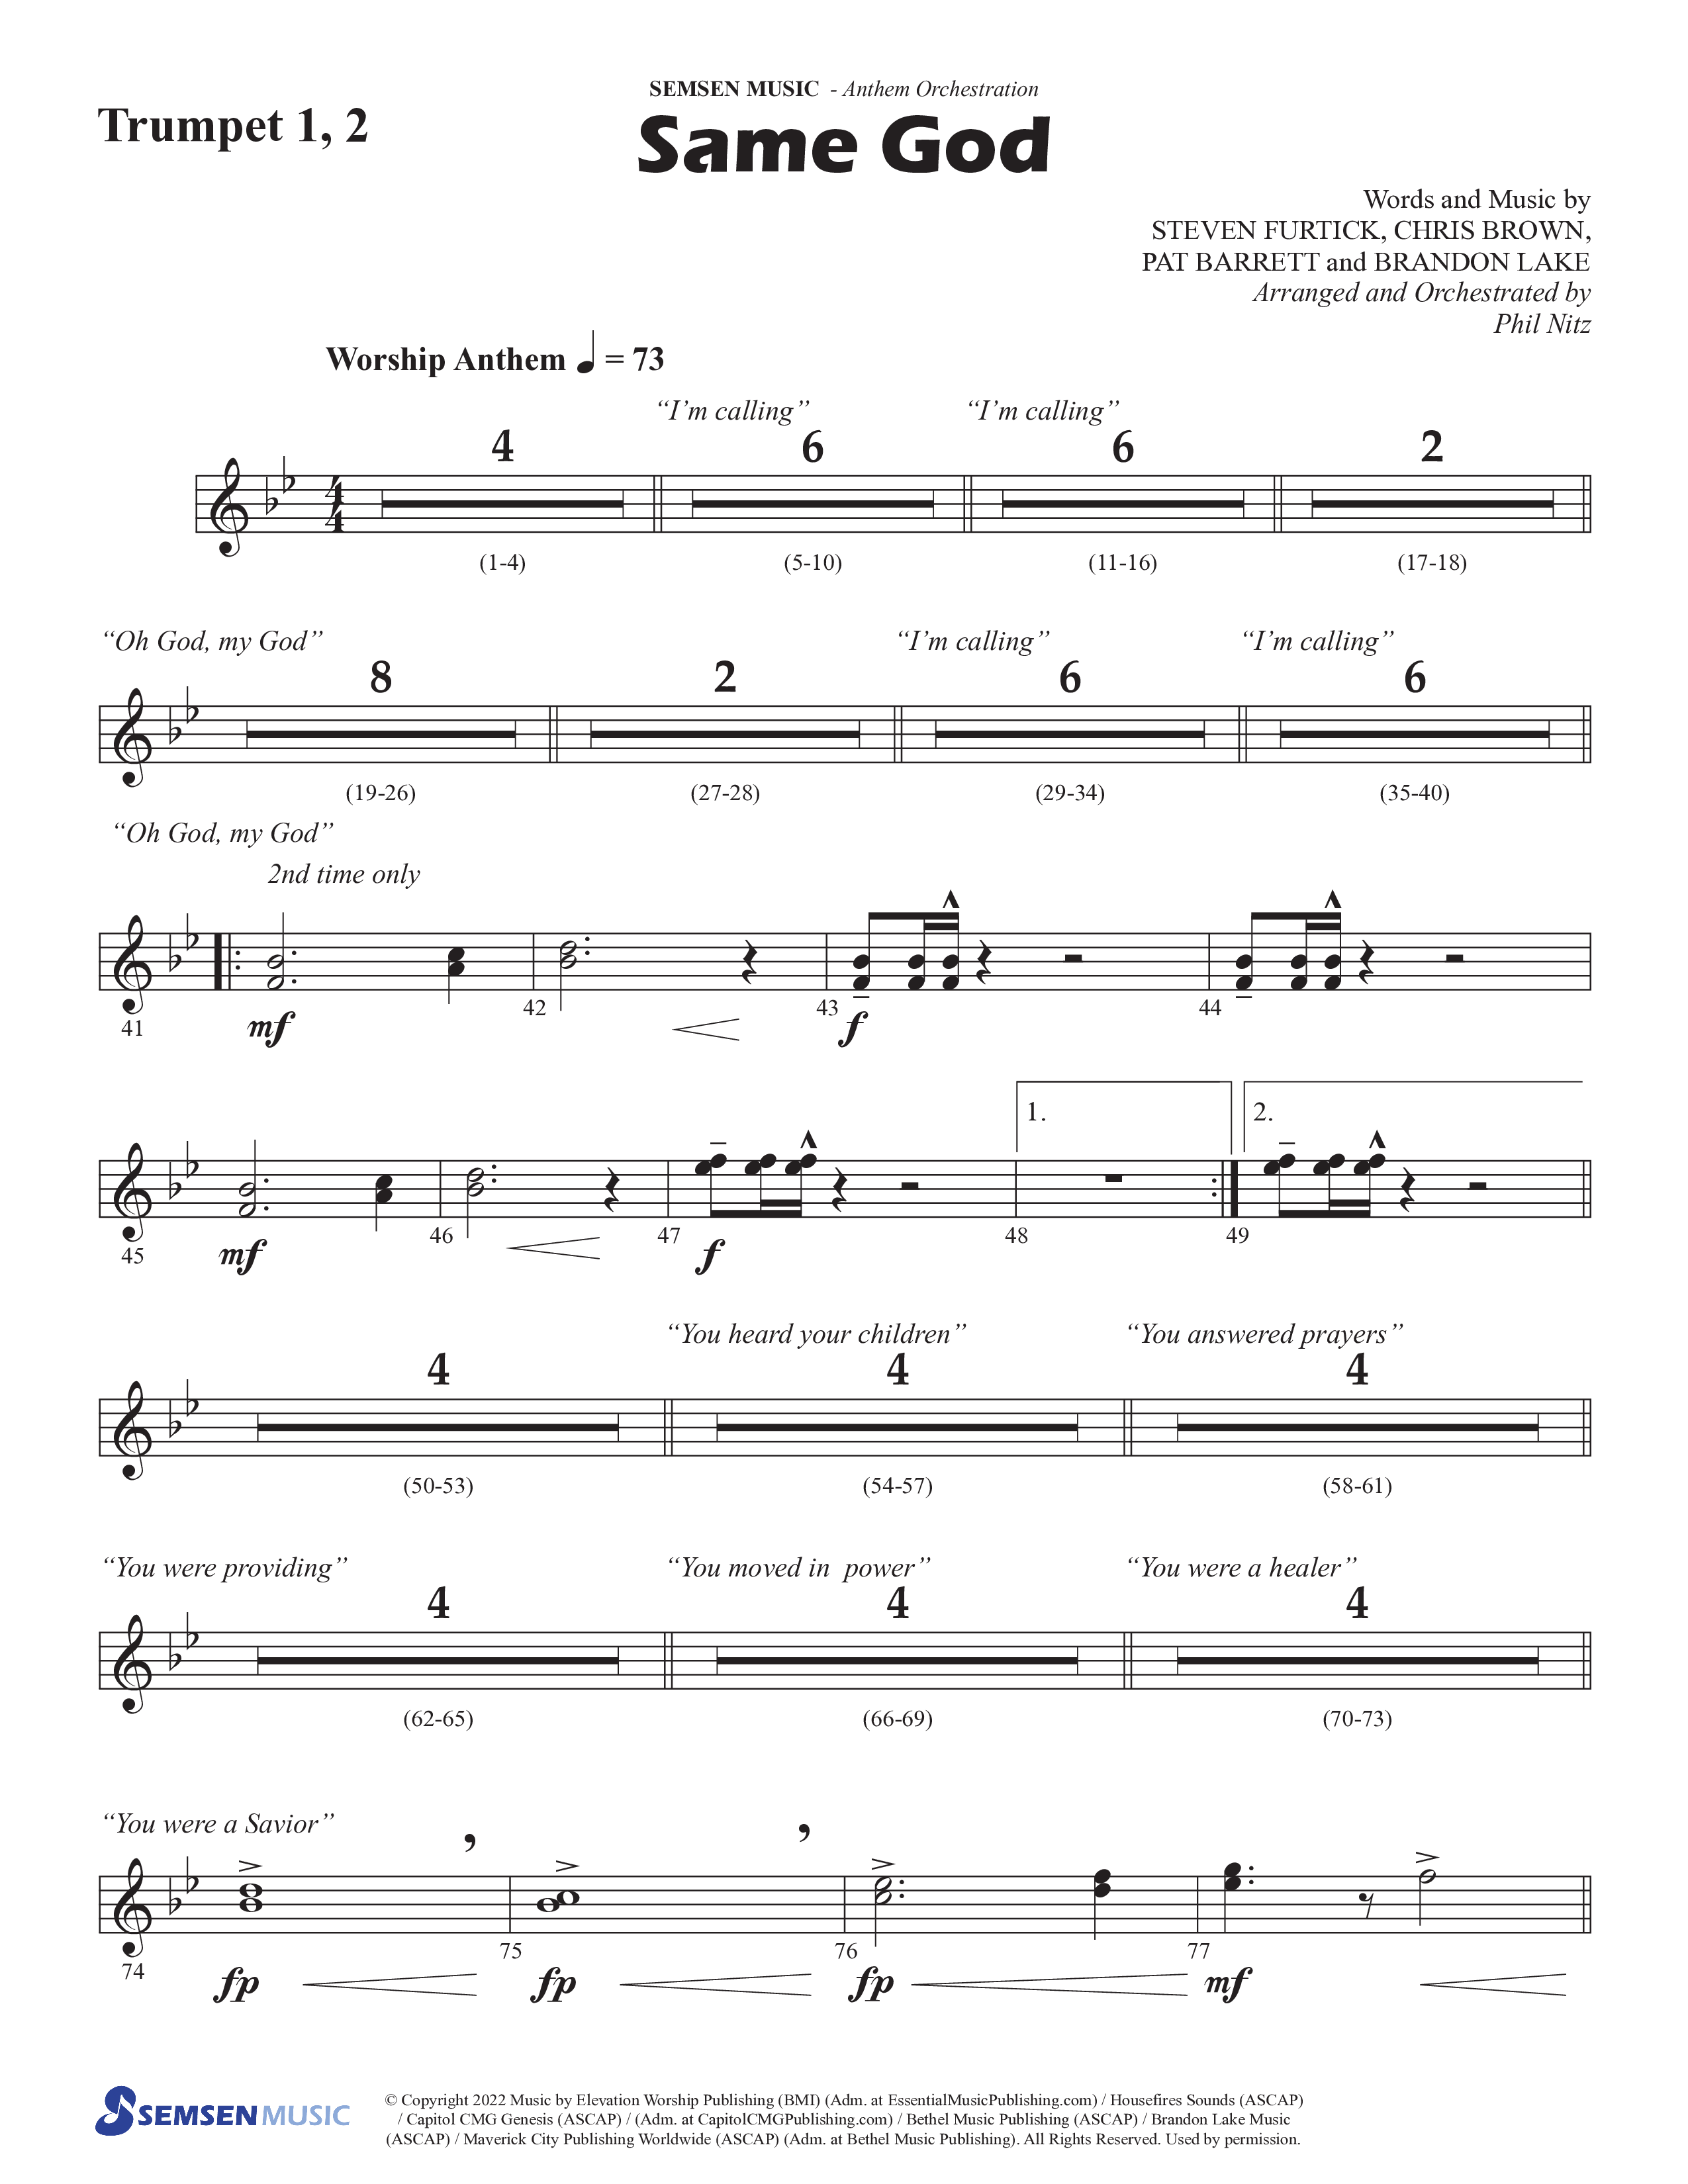 Same God (Choral Anthem SATB) Trumpet 1,2 (Semsen Music / Arr. Phil Nitz)